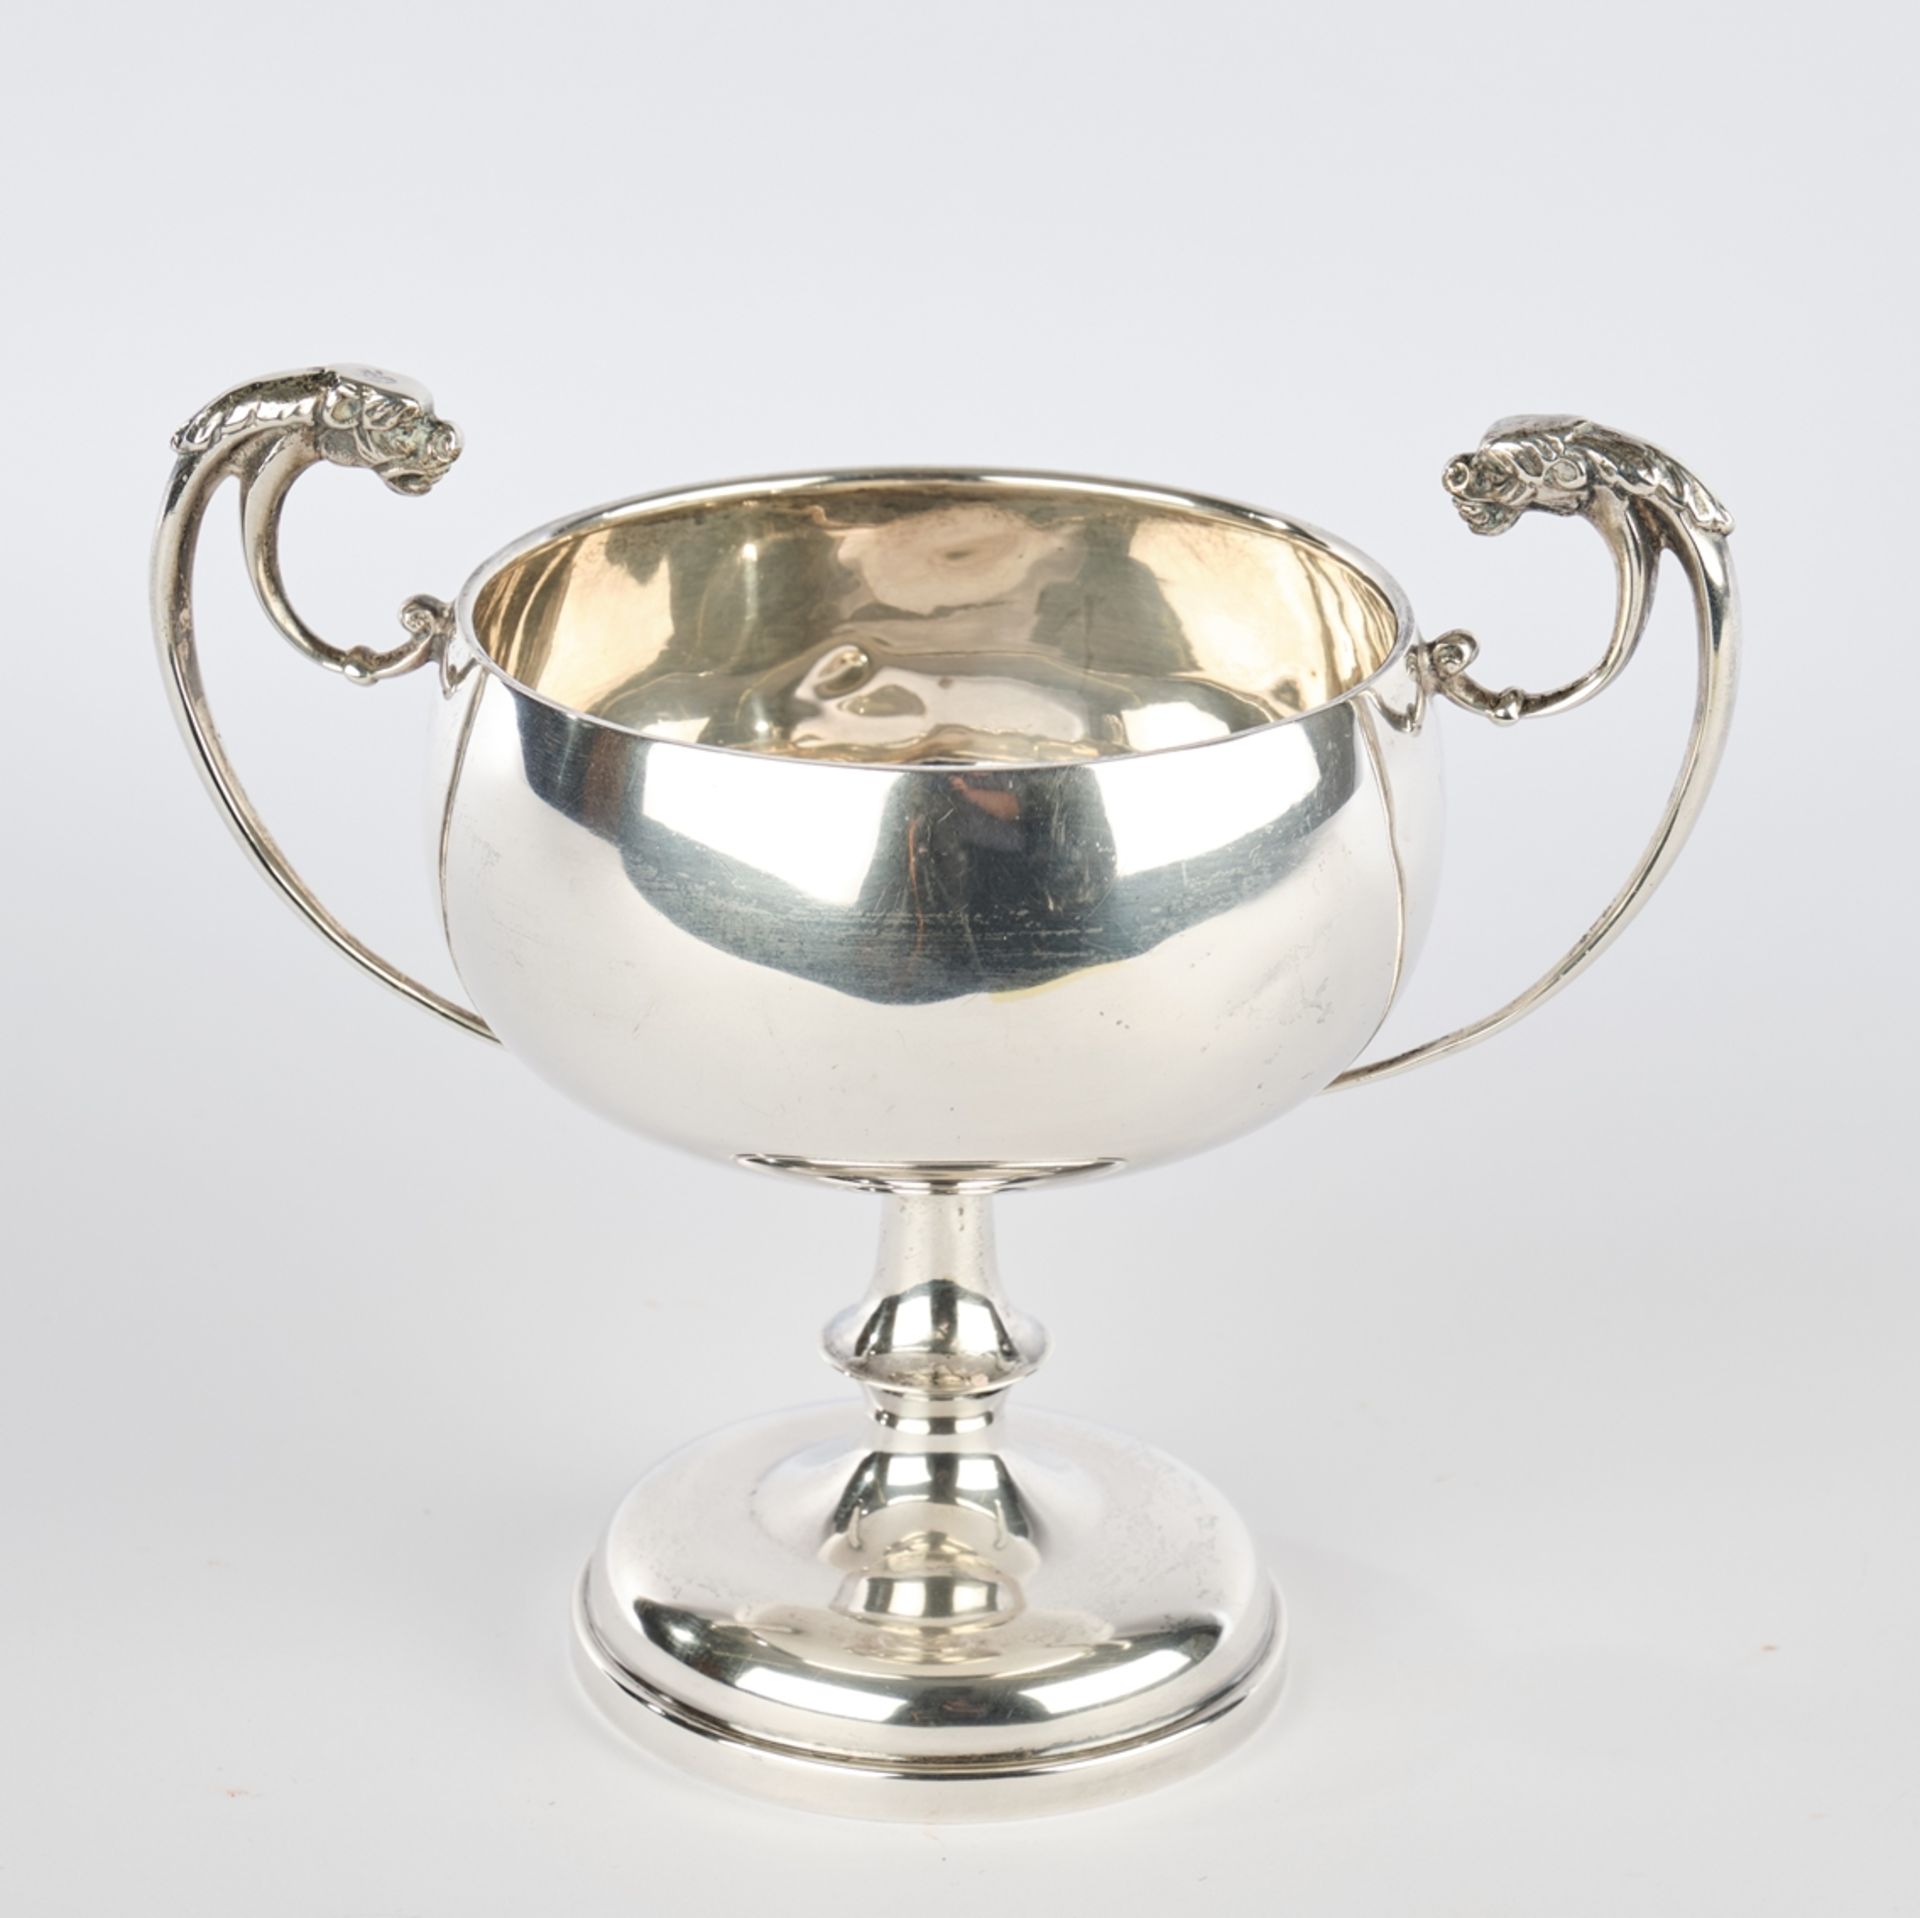 Foot bowl, silver 925, Birmingham, 1933, F. Fattorini & Son Ltd, goblet-shaped, two raised handles 